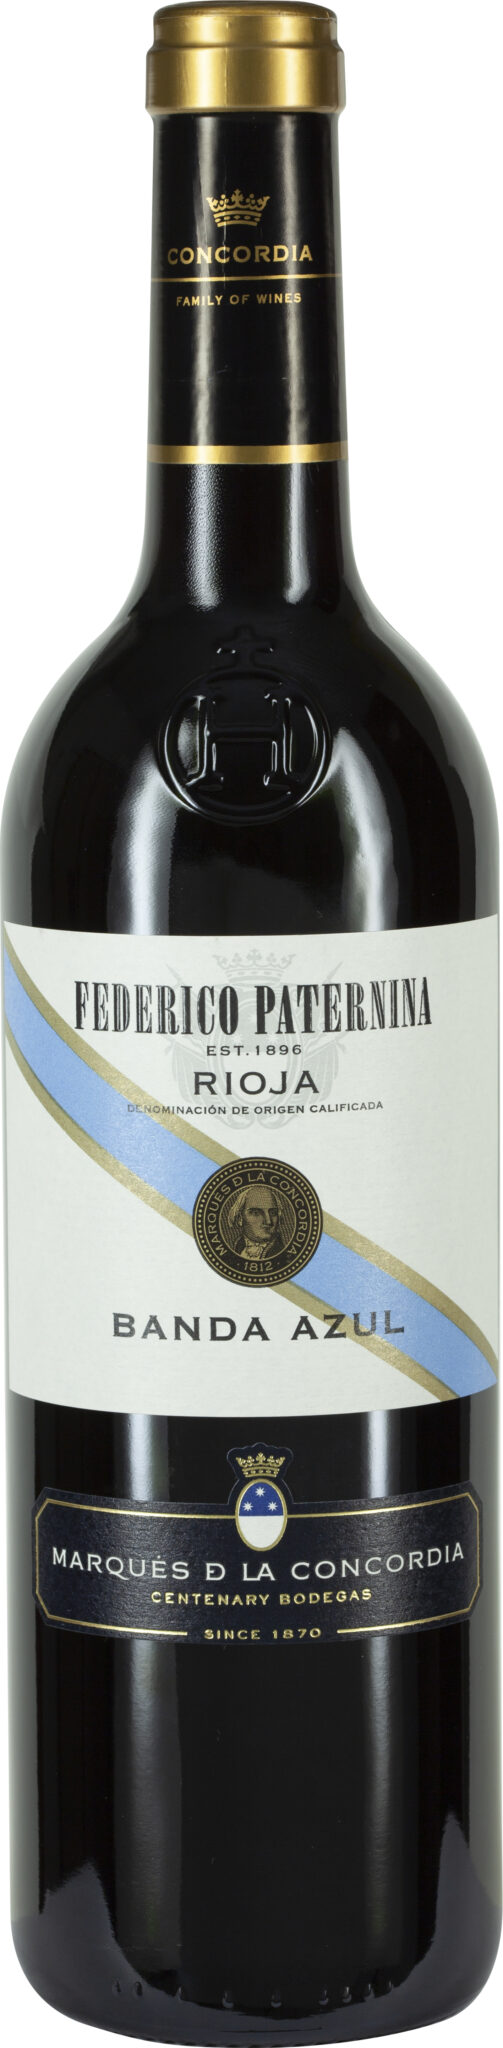 Federico Paternina Banda Azul Rioja bei DOCa der-schmeckt-mir